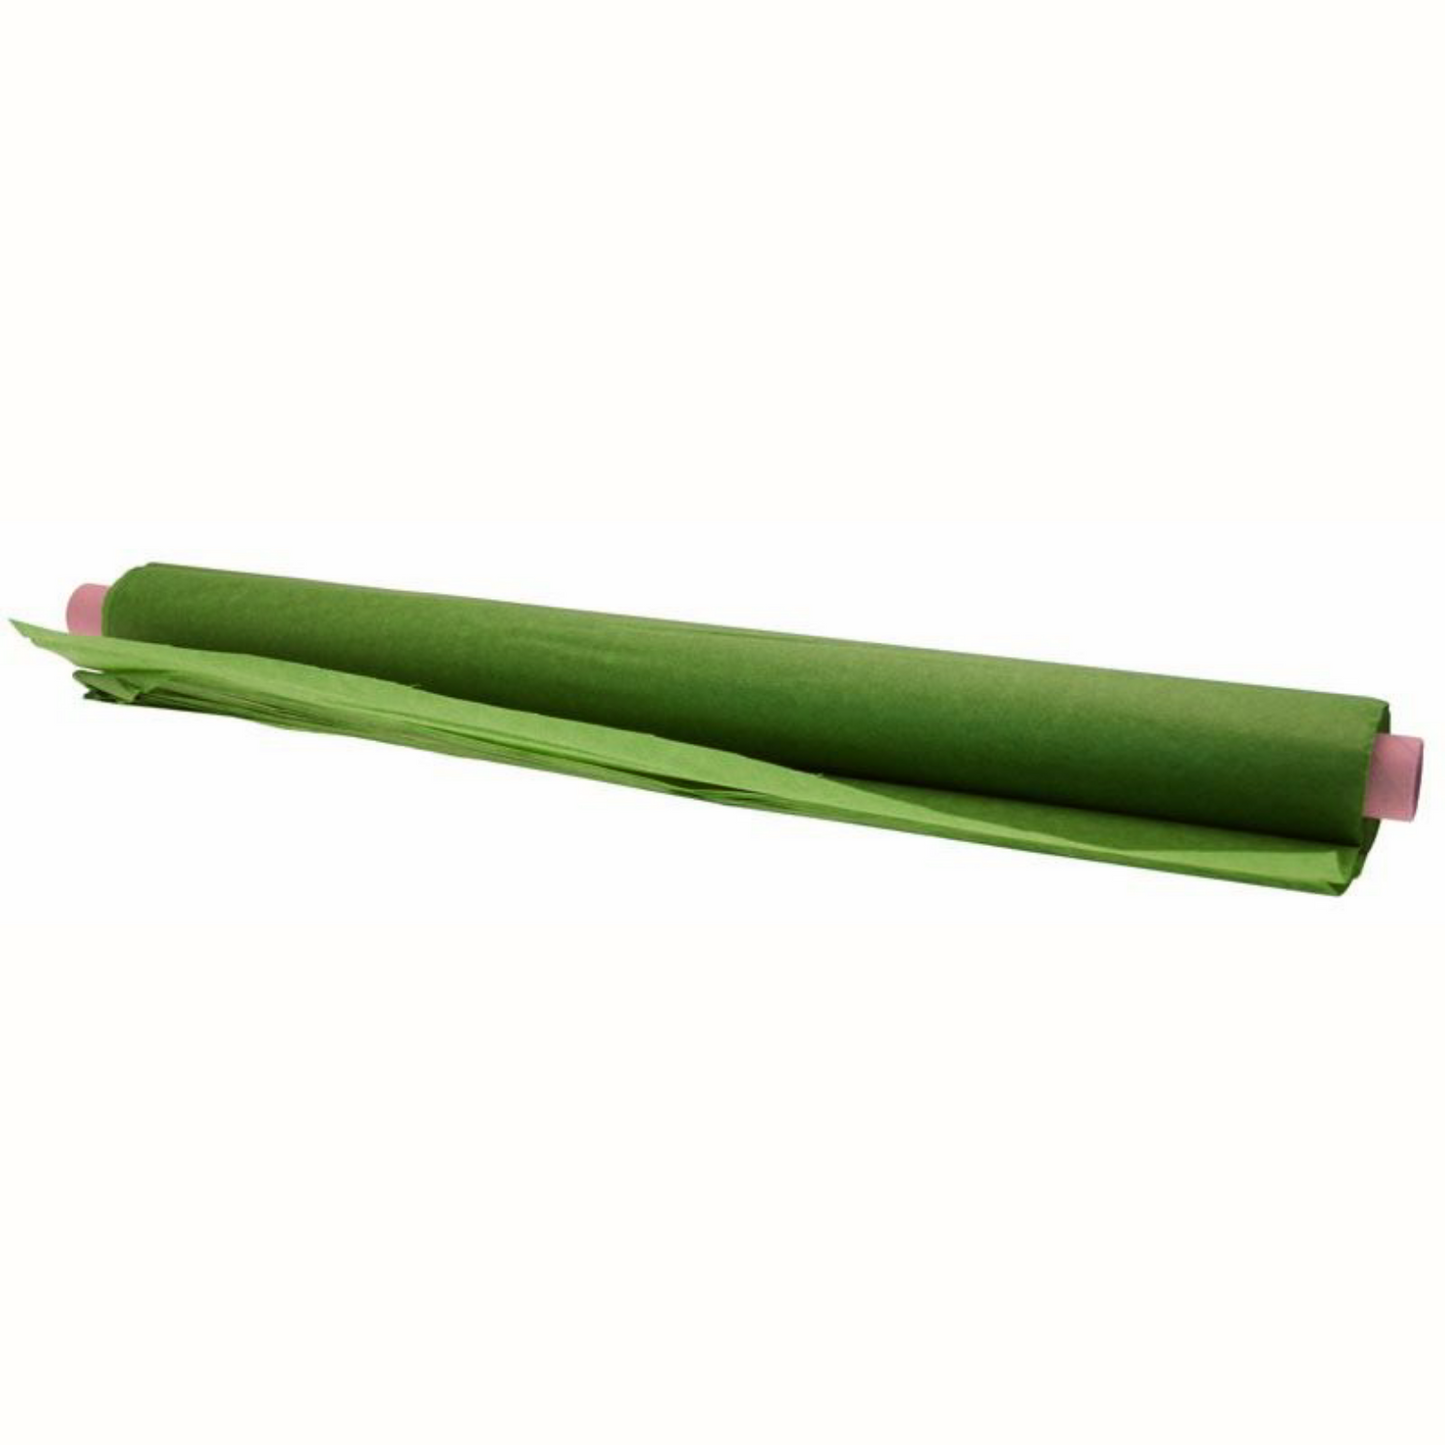 Moss Green Craft Tissue (48 Sheets) (50cm x 75cm)